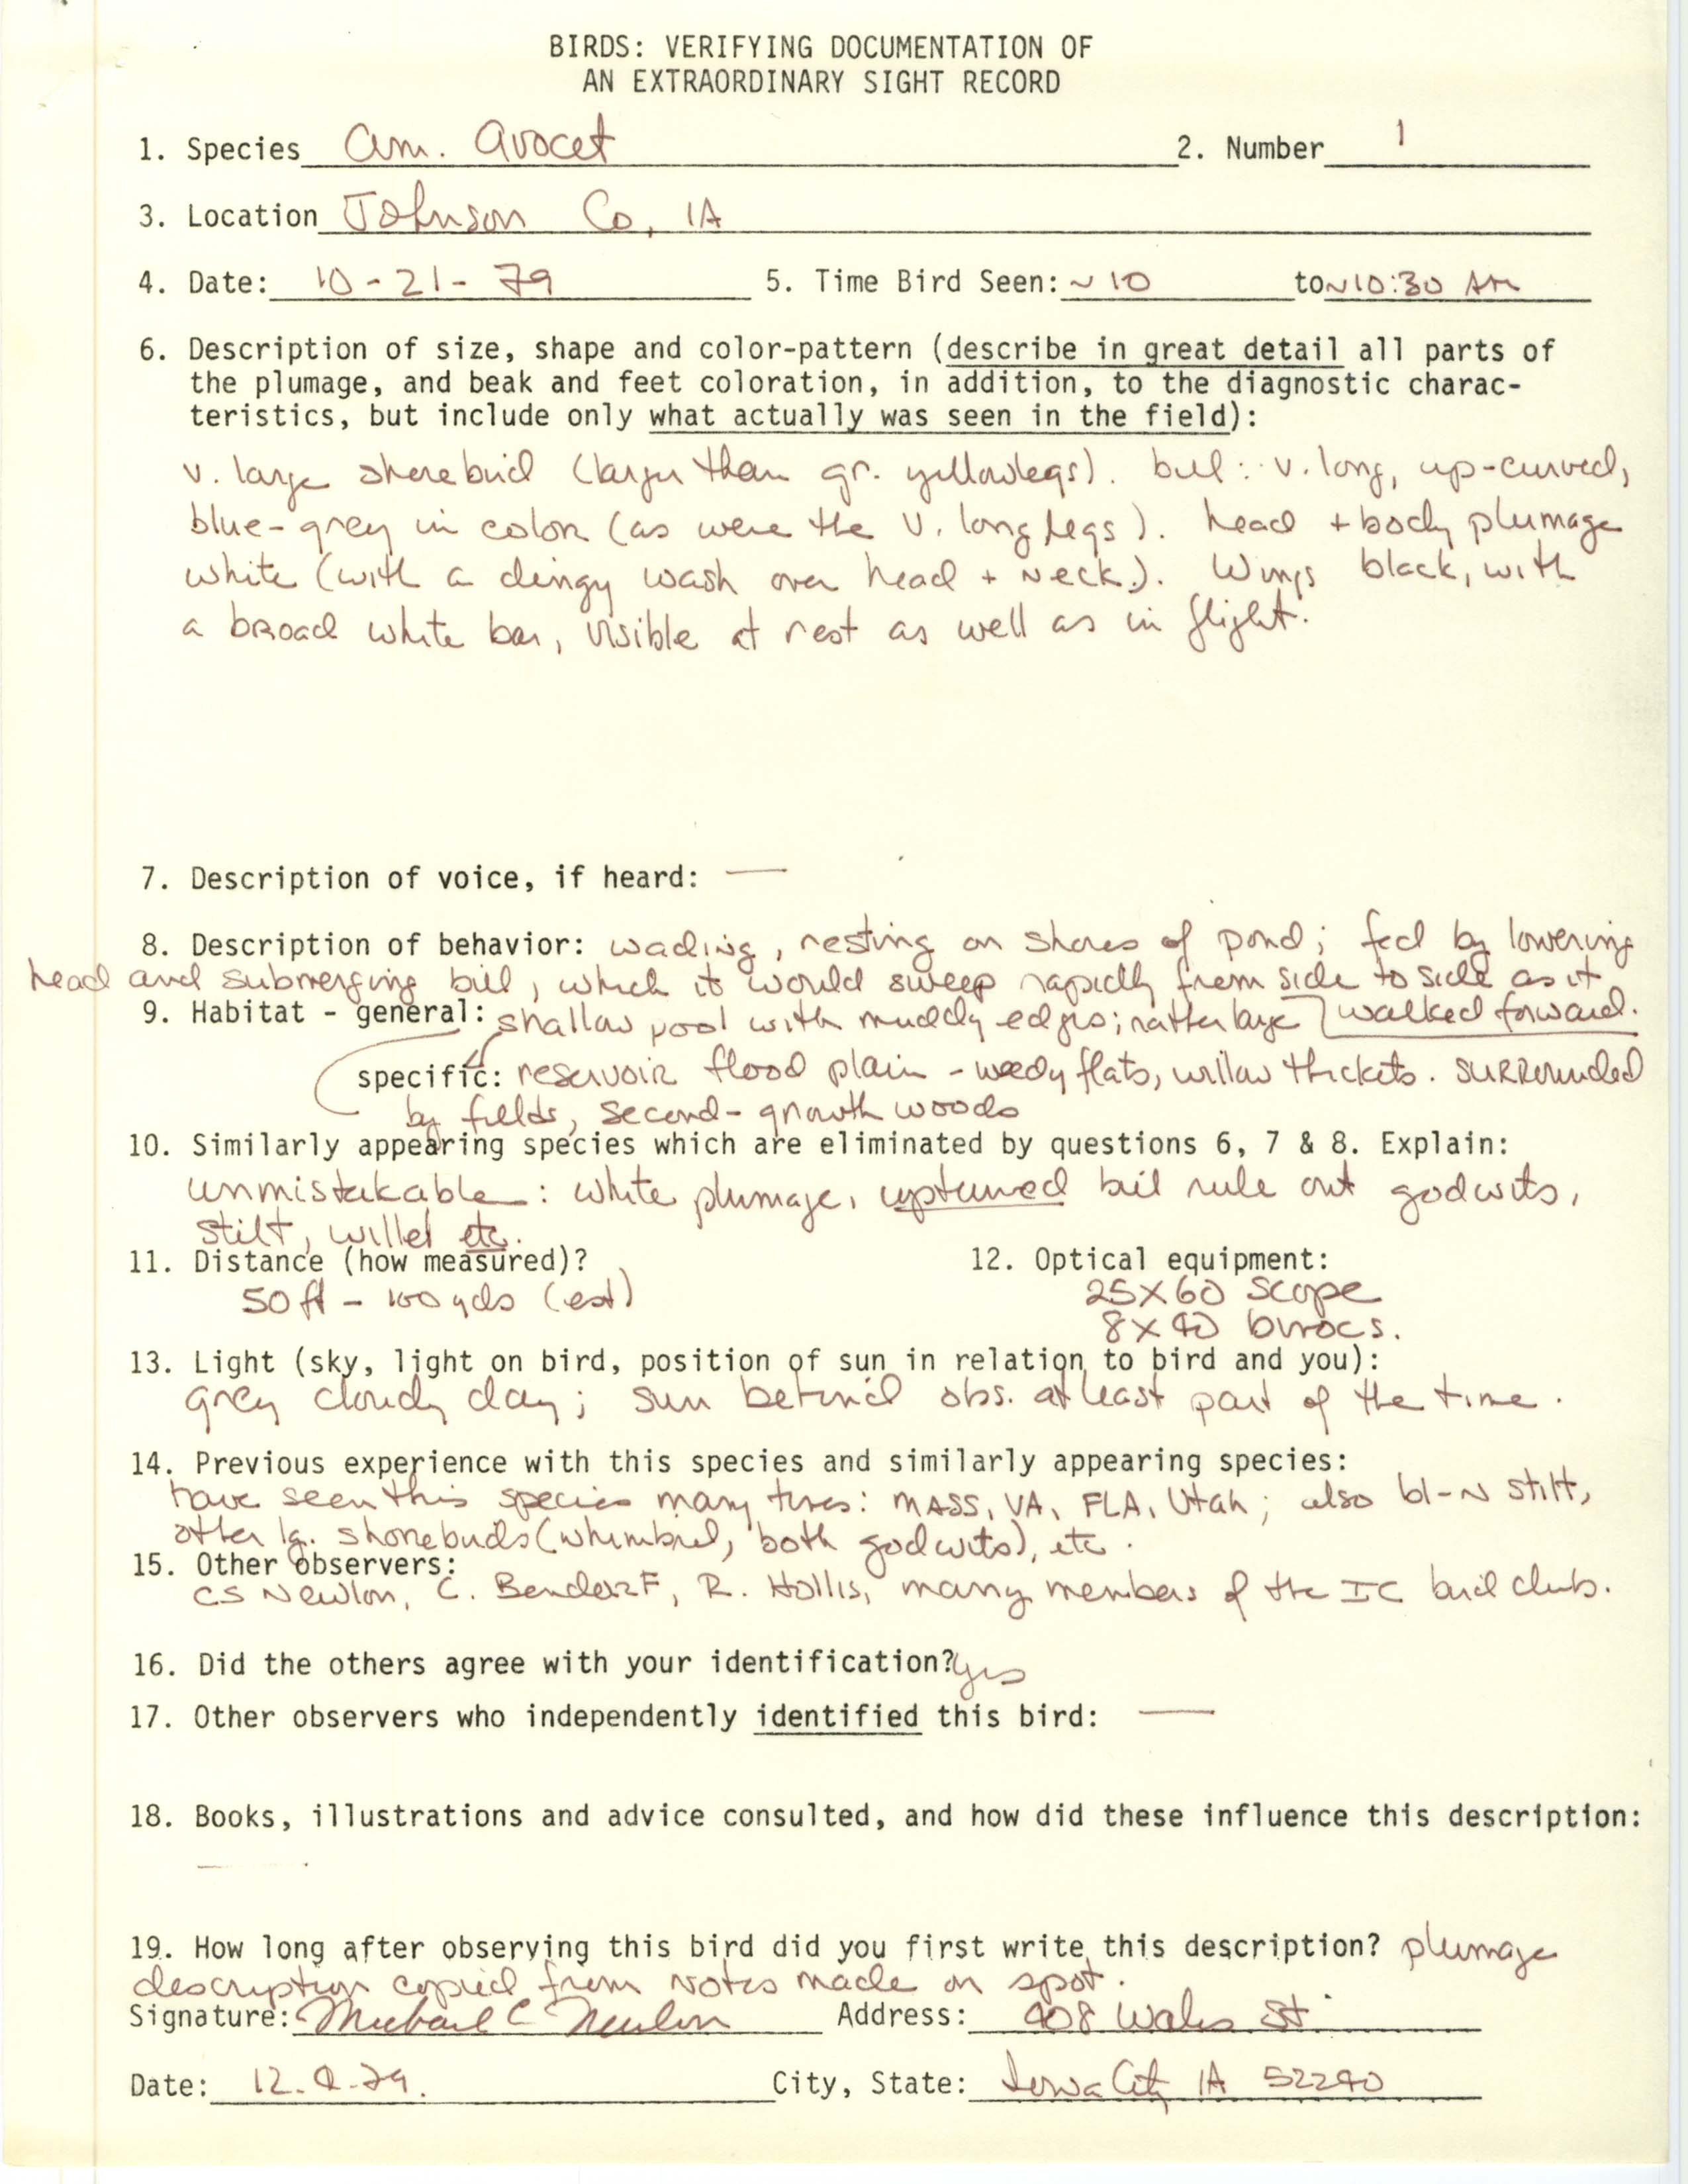 Rare bird documentation form for American Avocet at Johnson County, 1979